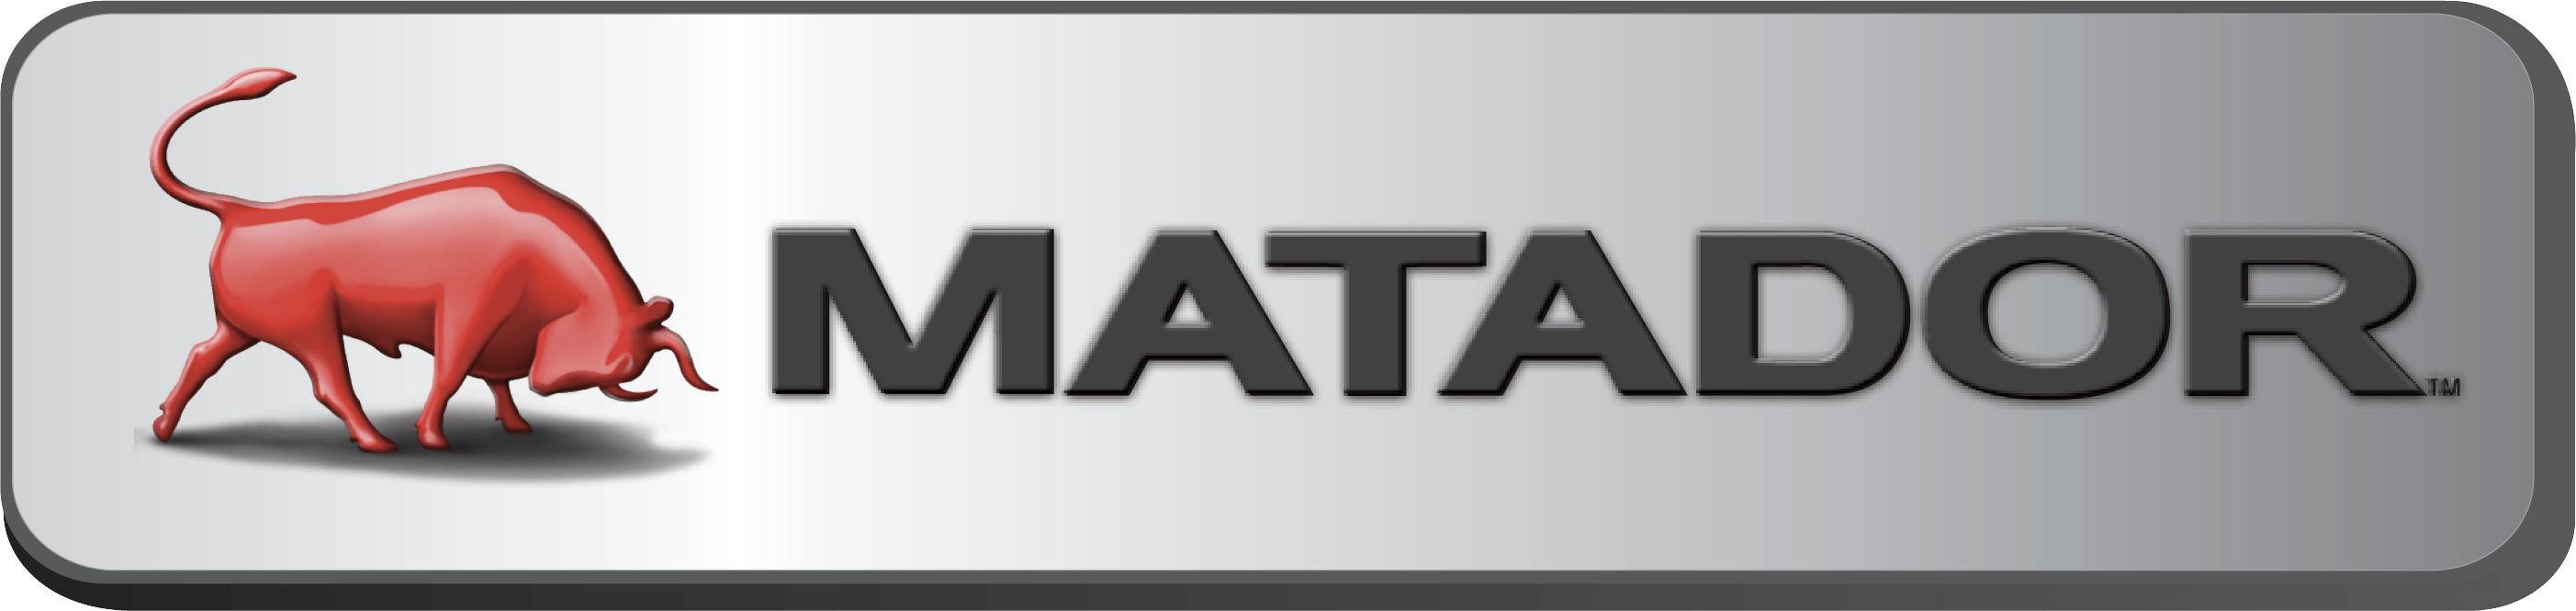 Matador Logo - Matador. BBQs & Barbecue Accessories Available